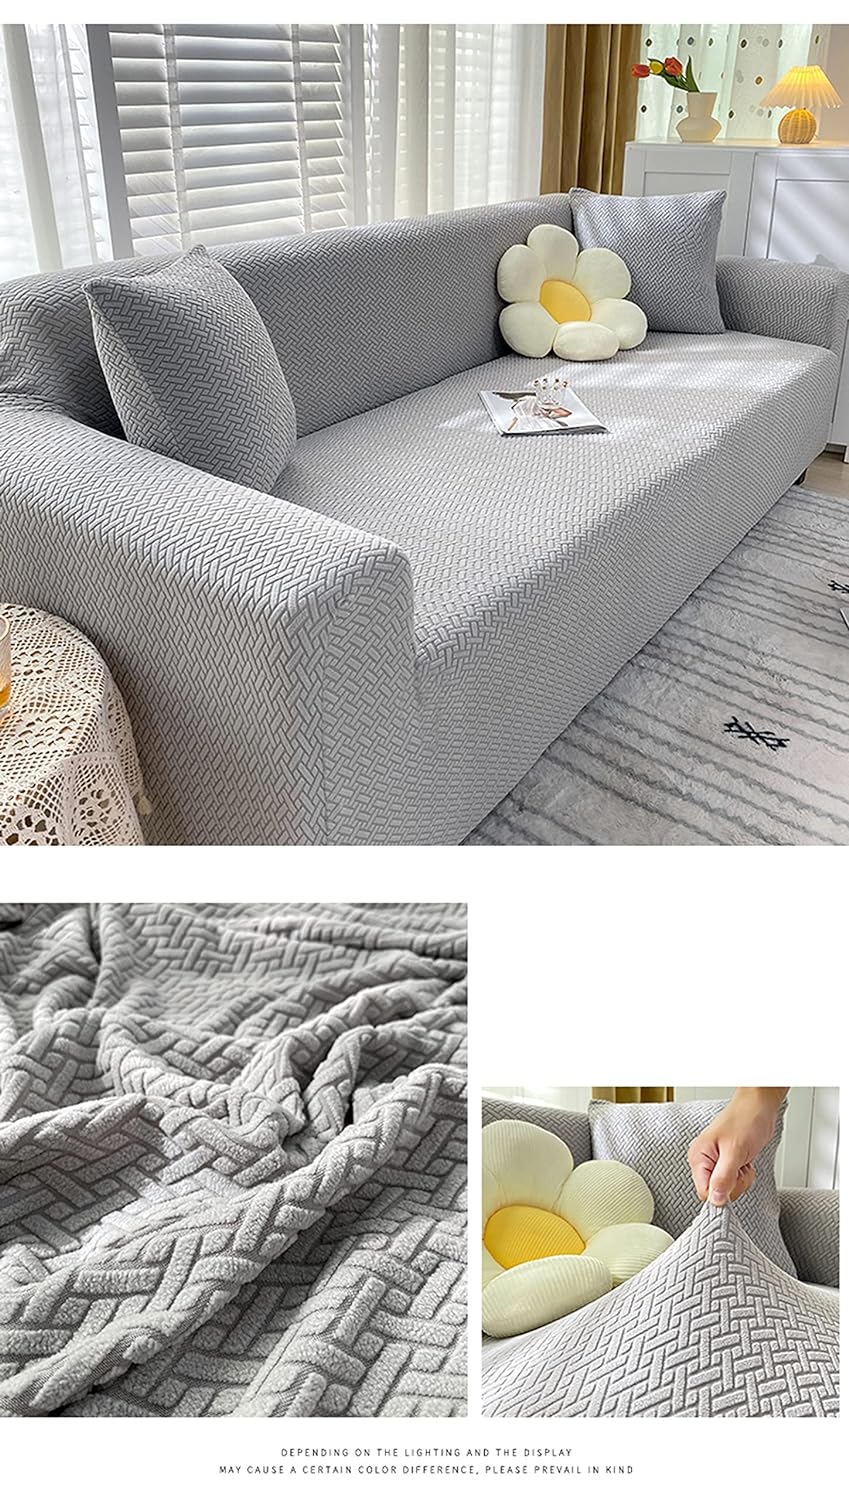 Universal Fleece Fabric Sofa Cover (Ligh Grey)